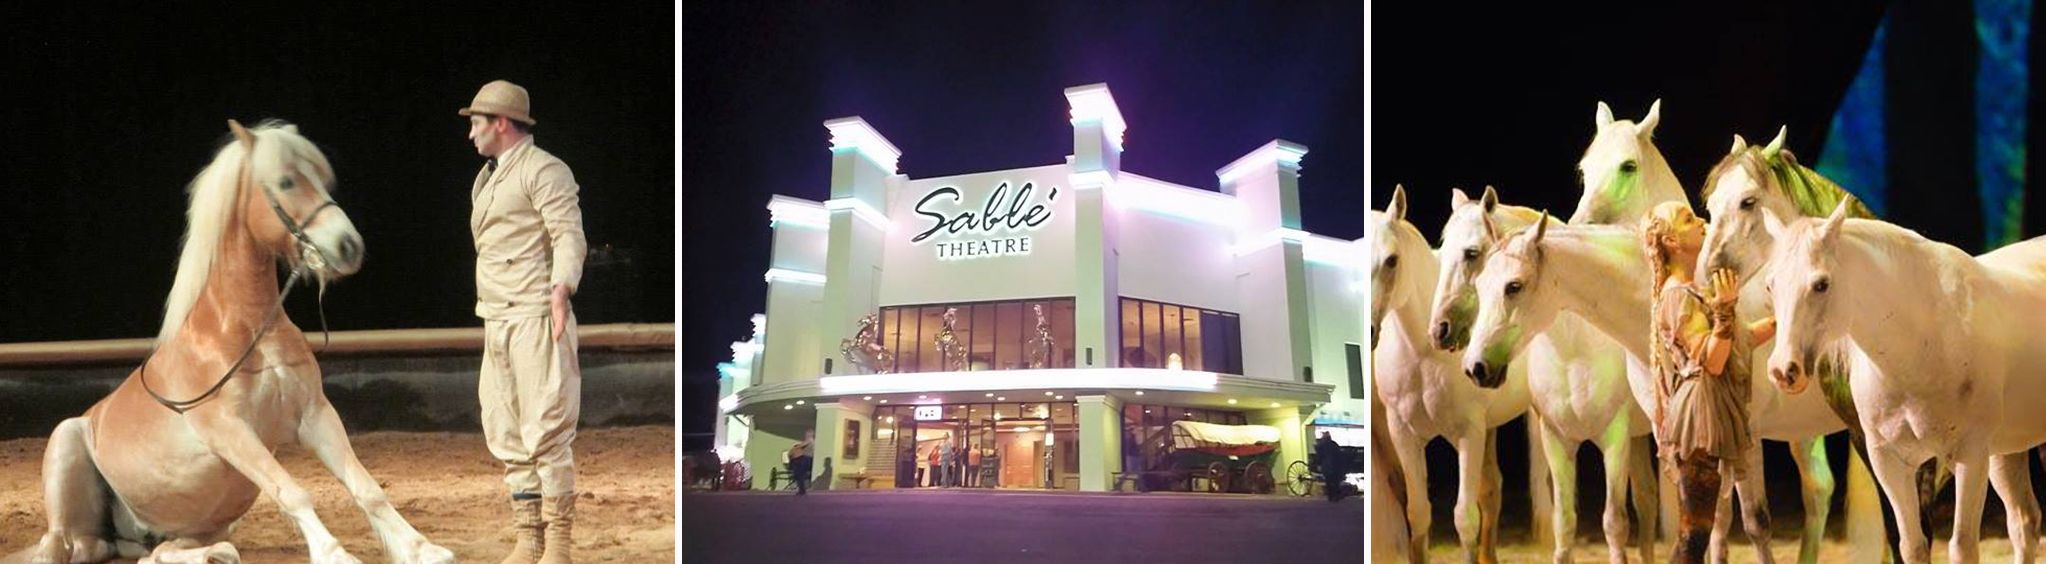 Sable Theatre